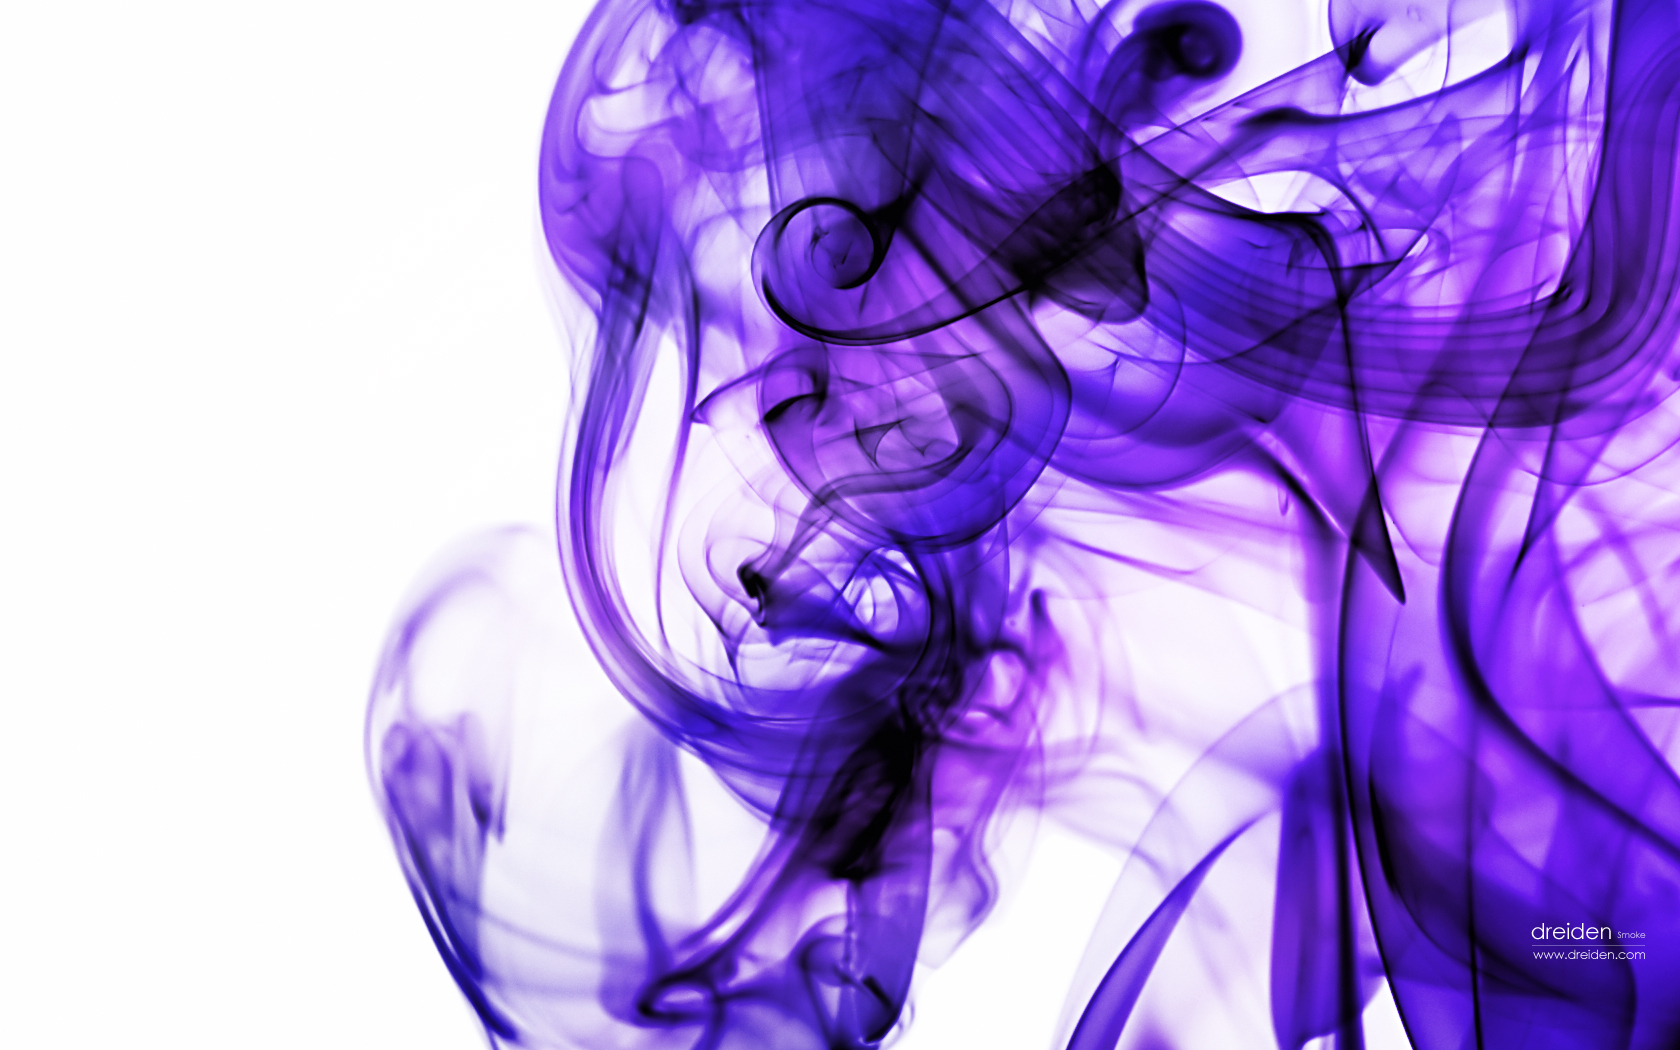 texture, cgi, smoke, abstract, pattern, colors, fractal, shapes